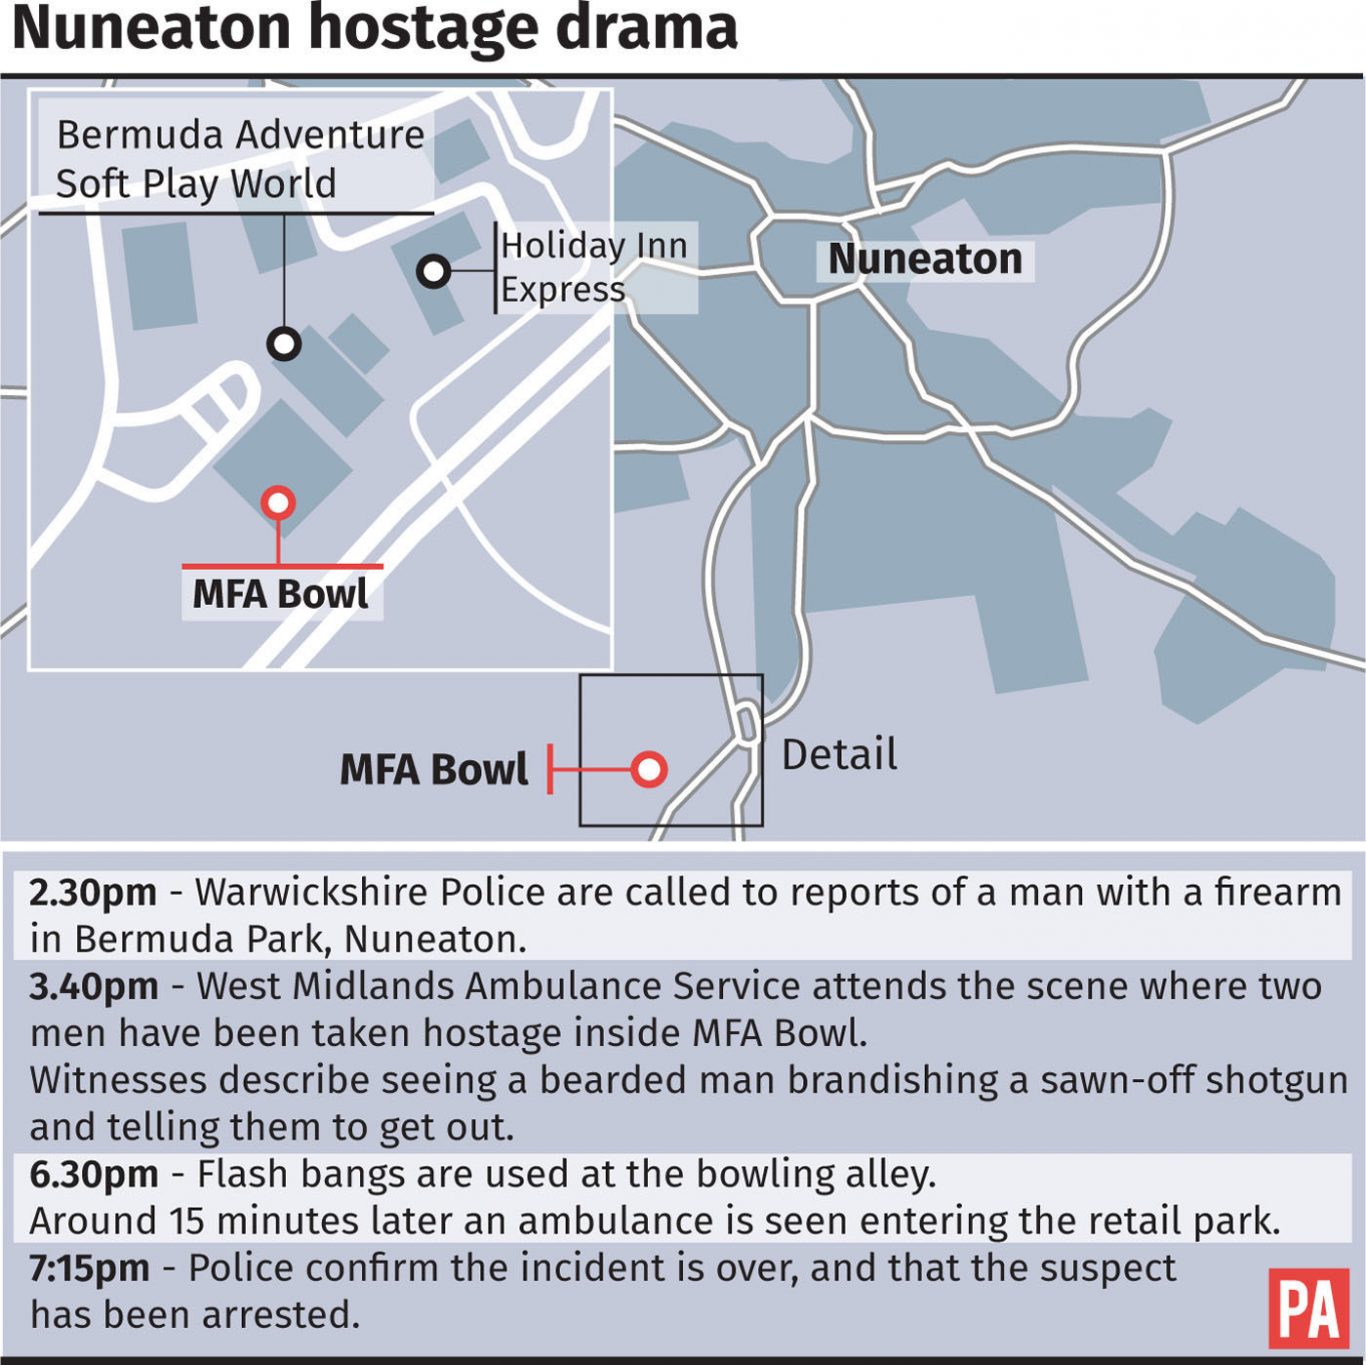 Nuneaton hostage drama timeline